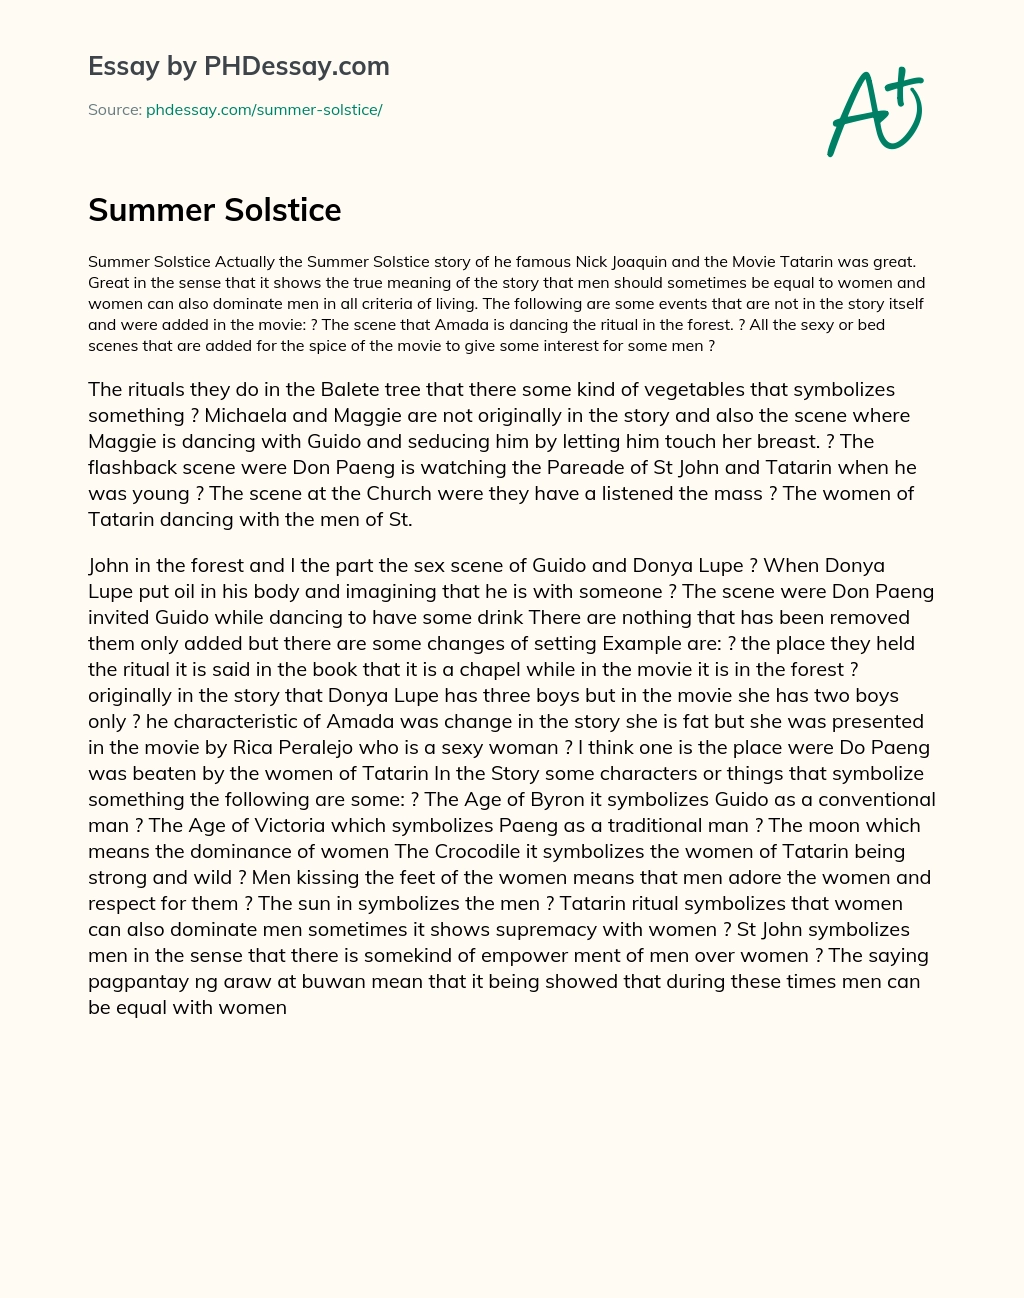 Summer Solstice essay